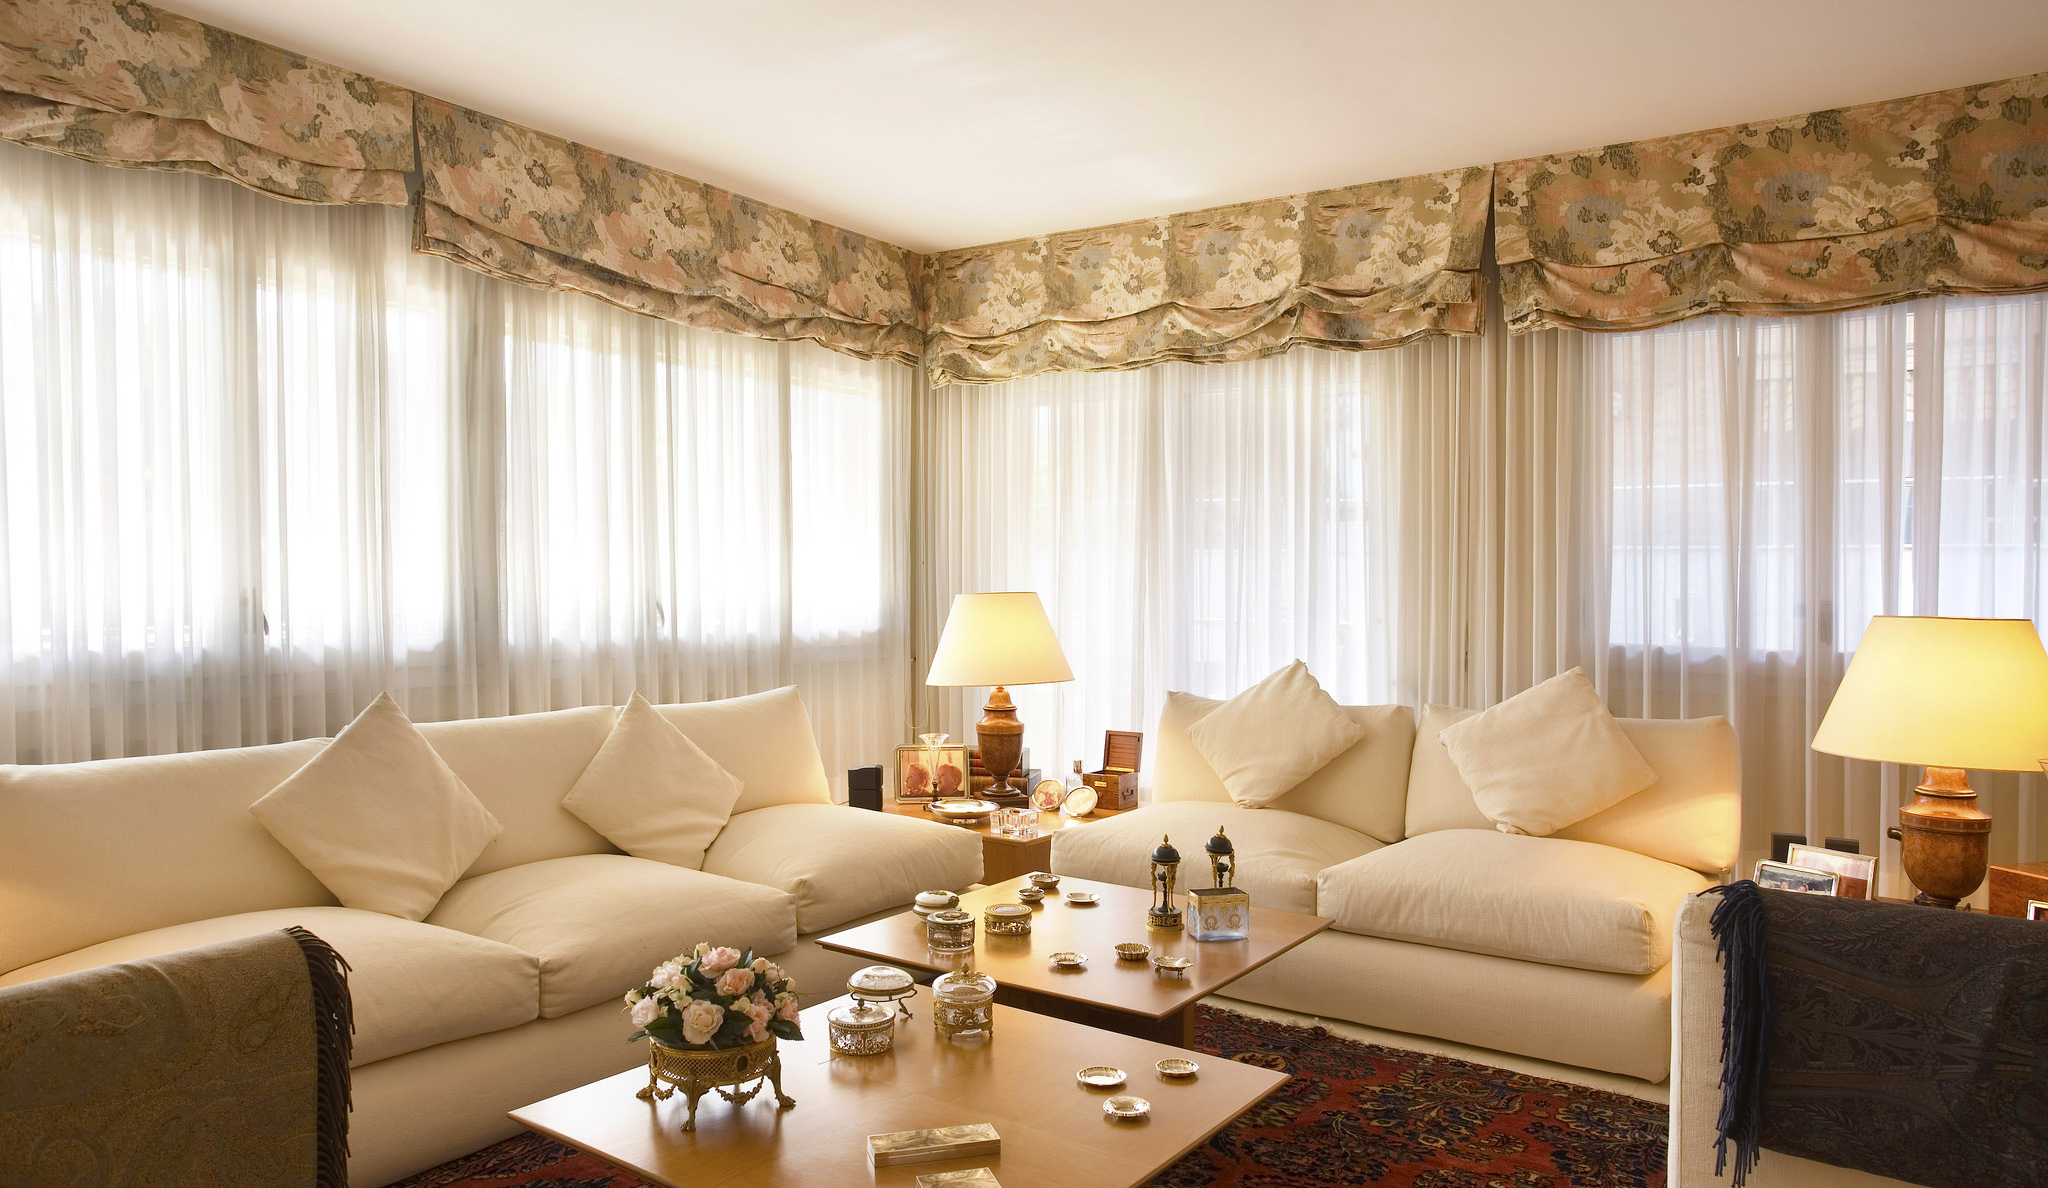 living room curtains textured linen